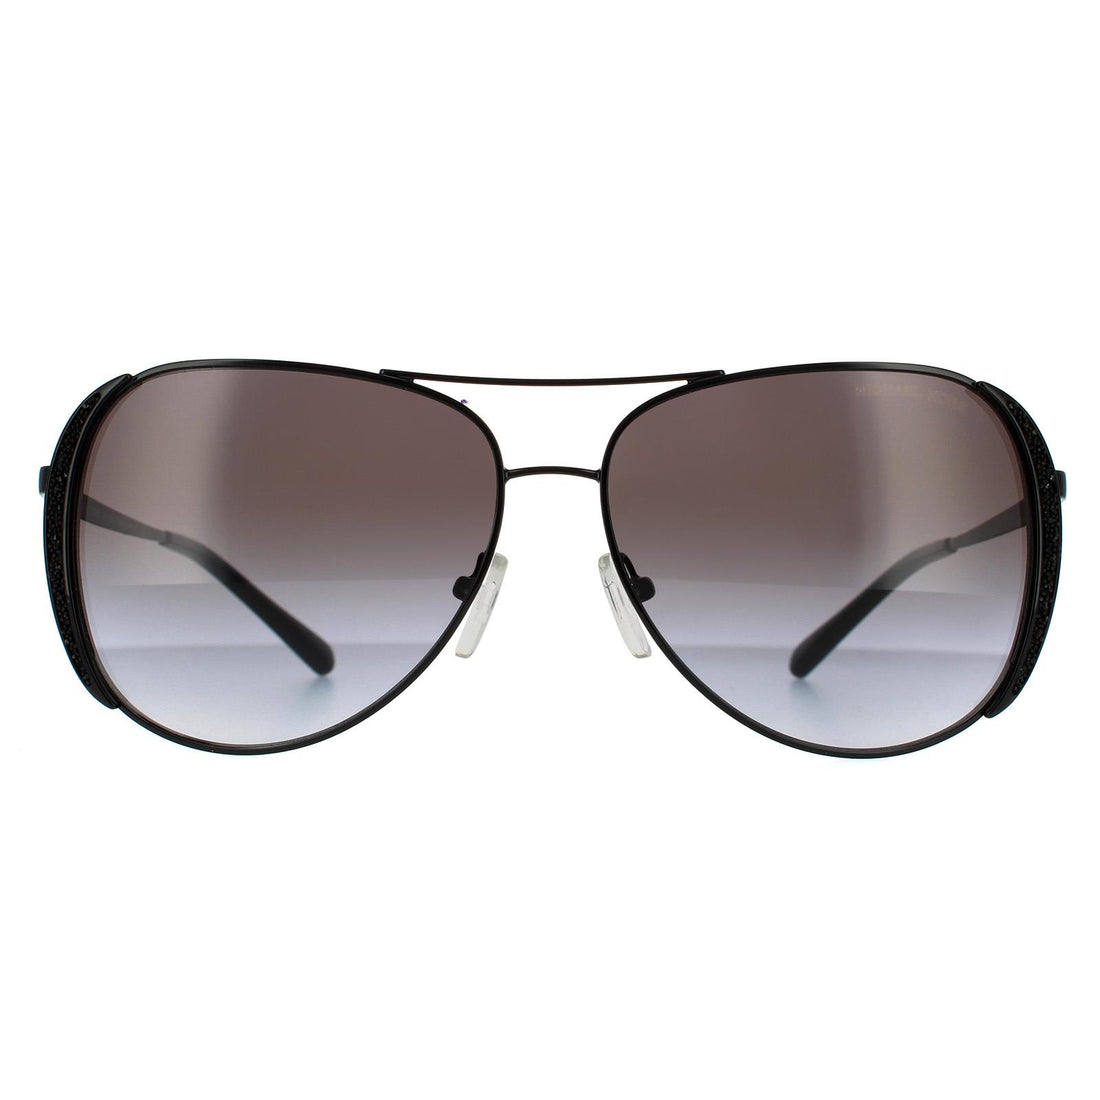 Michael Kors Sunglasses MK1082 10618G Black Dark Grey Gradient